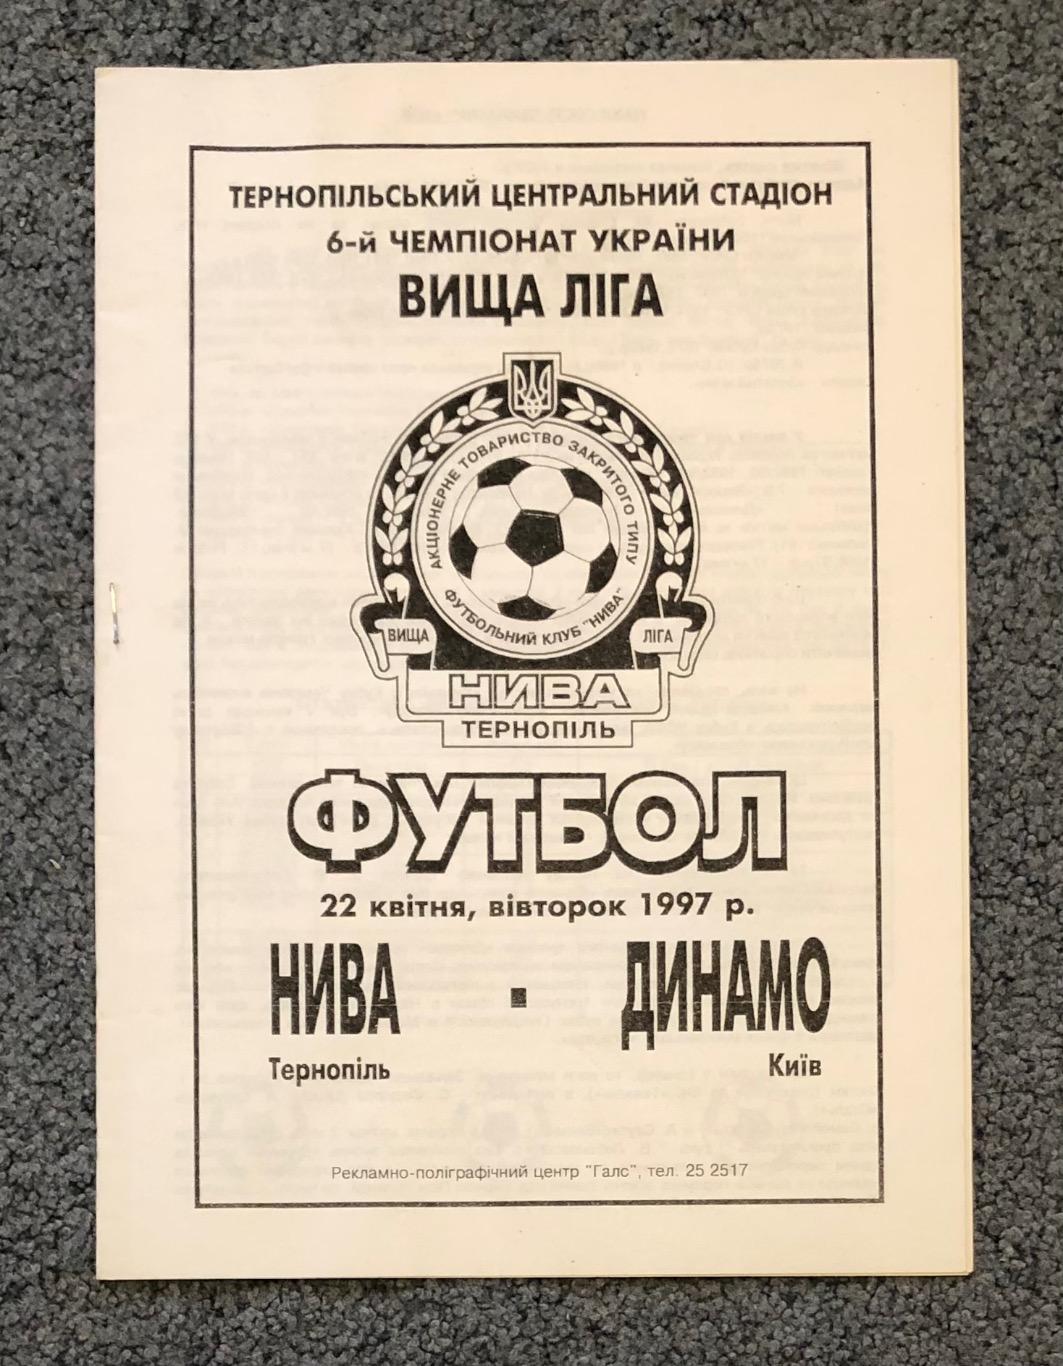 Нива Тернополь - Динамо Киев, 22.04.1997